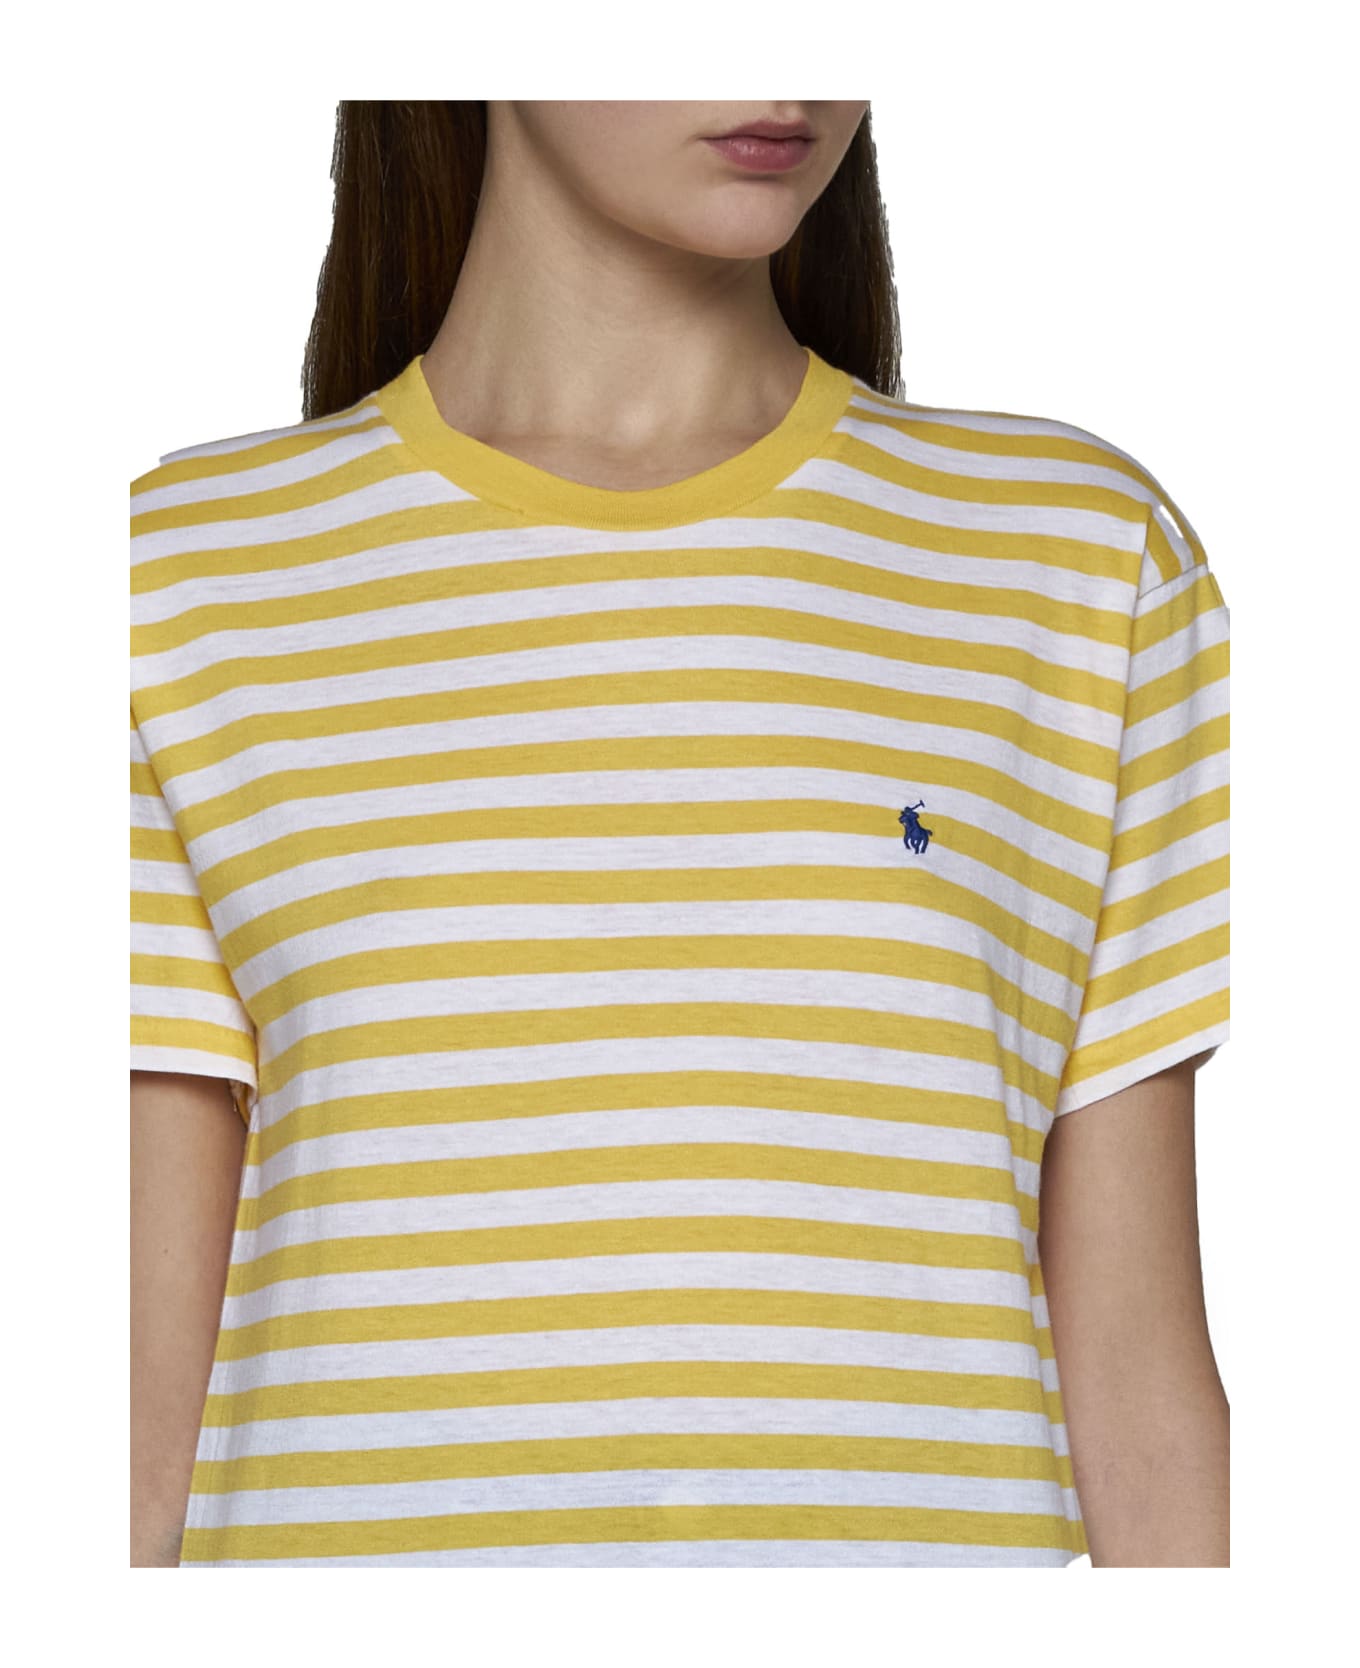 Polo Ralph Lauren T-Shirt - Chrome yellow/white